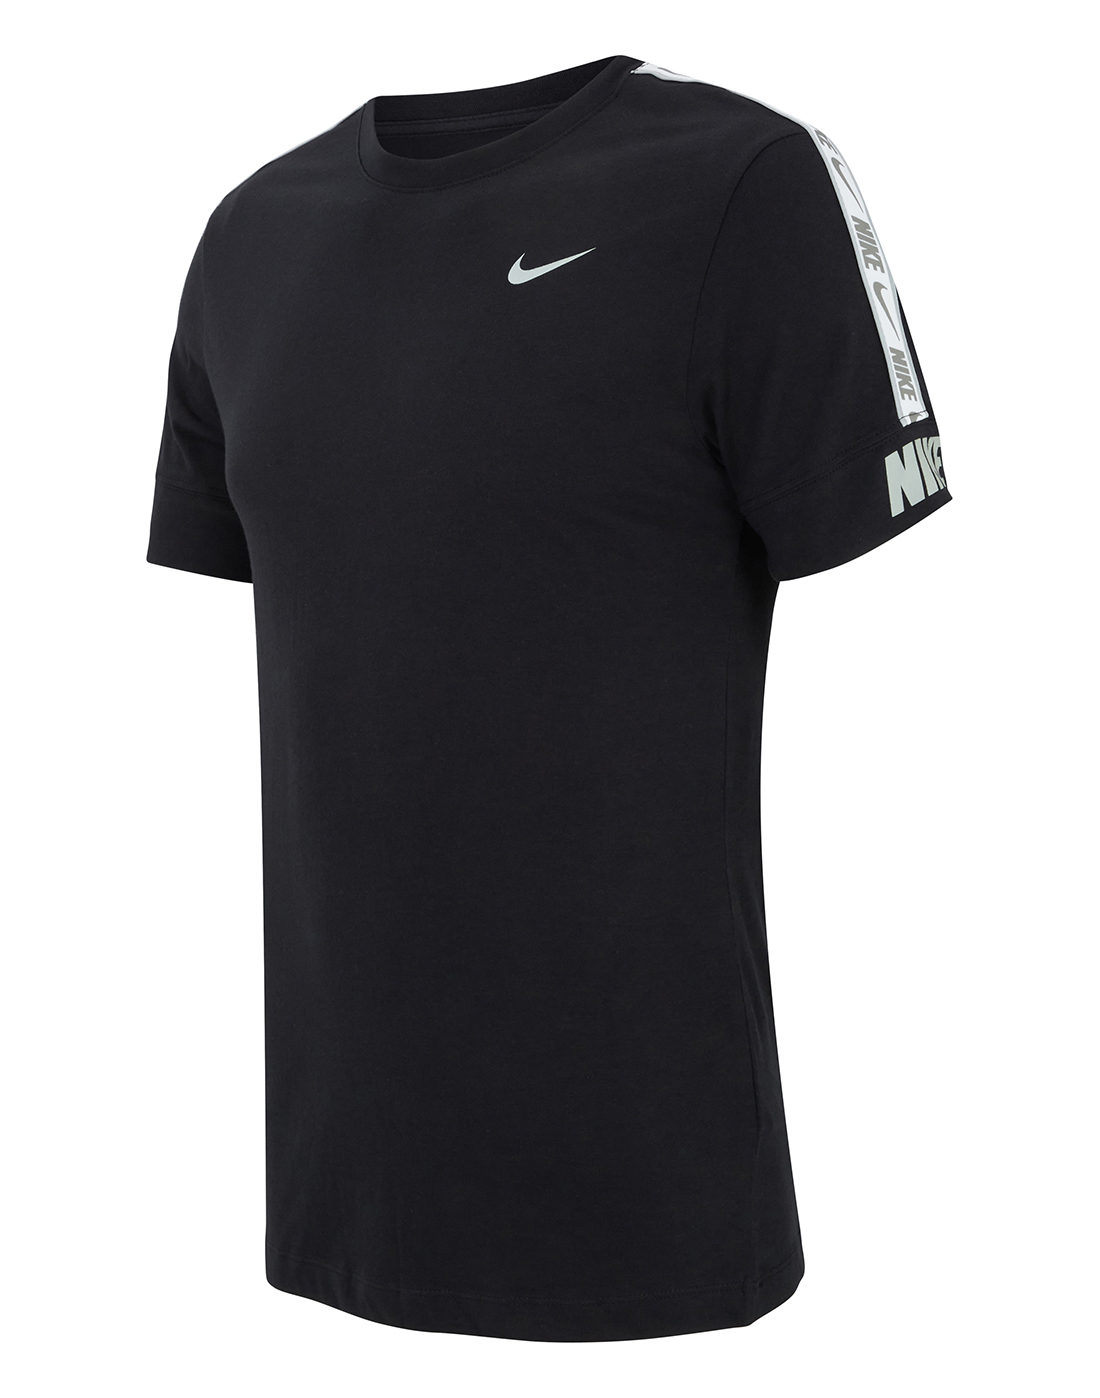 Nike Mens Repeat Reflective Taping T-Shirt - Black | Life Style Sports EU